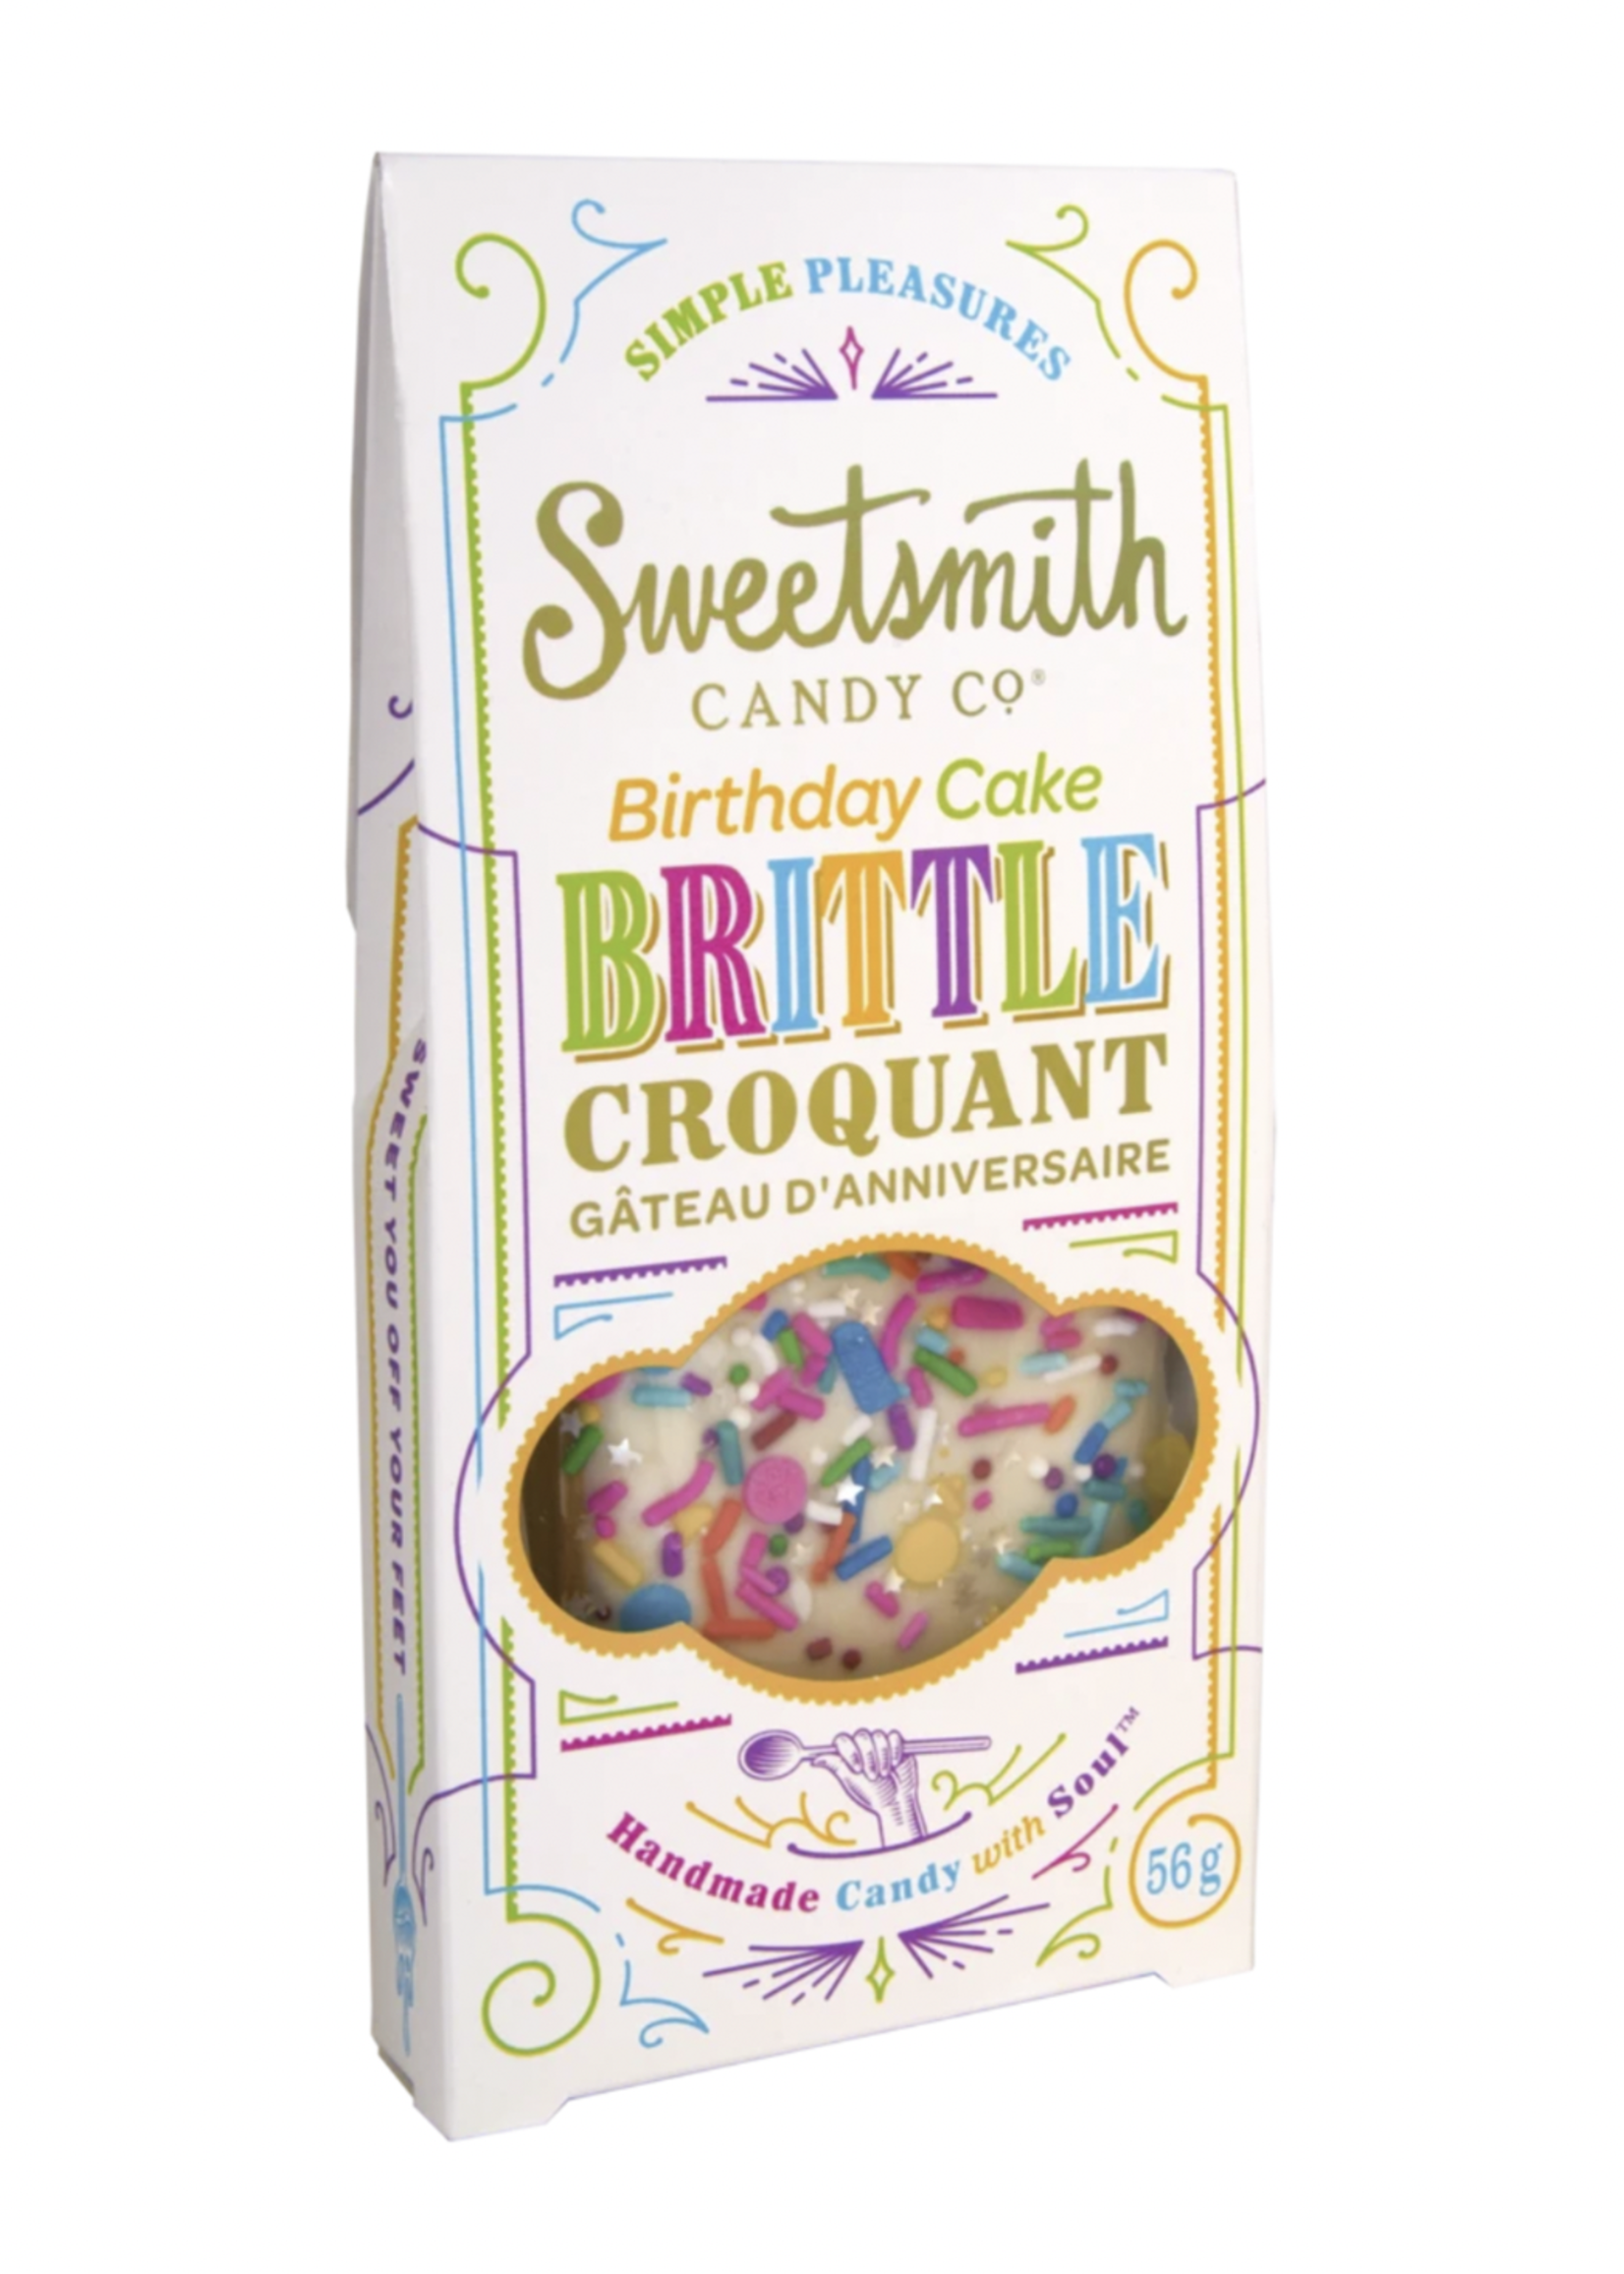 Sweetsmith Candy Co. Vanilla Birthday Cake Brittle